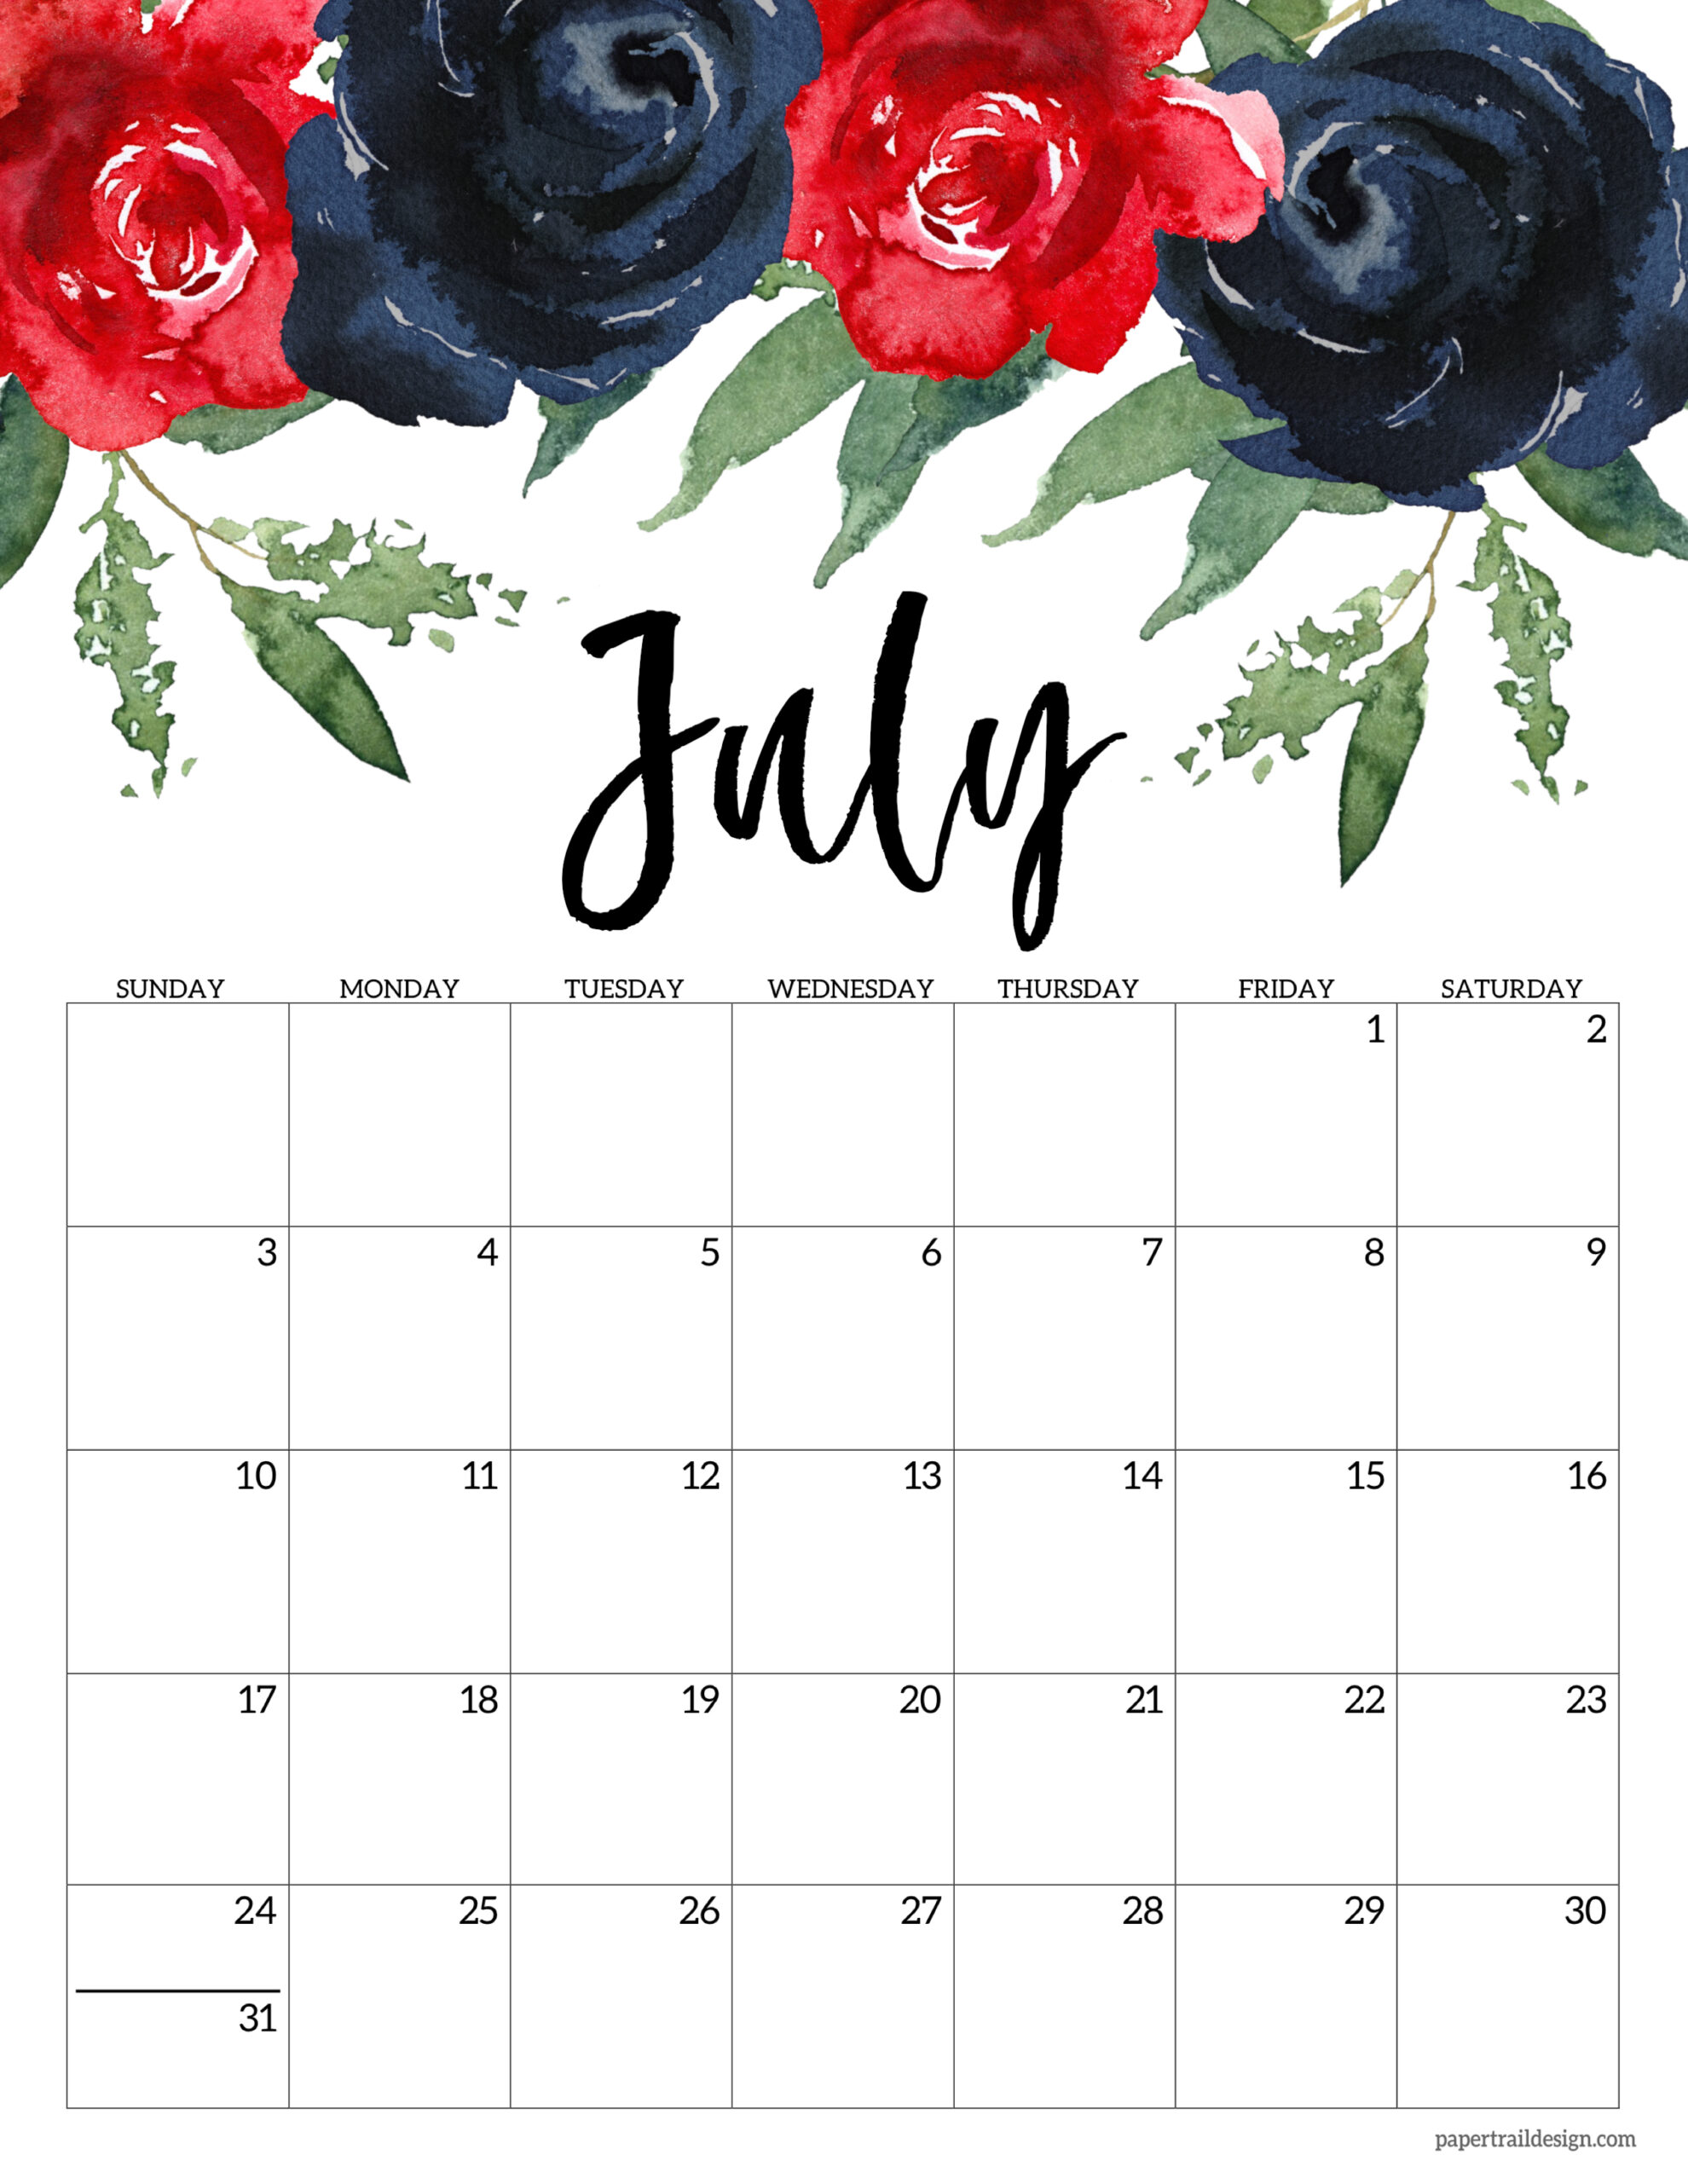 June July Calendar 2022 Free 2022 Calendar Printable - Floral - Paper Trail Design